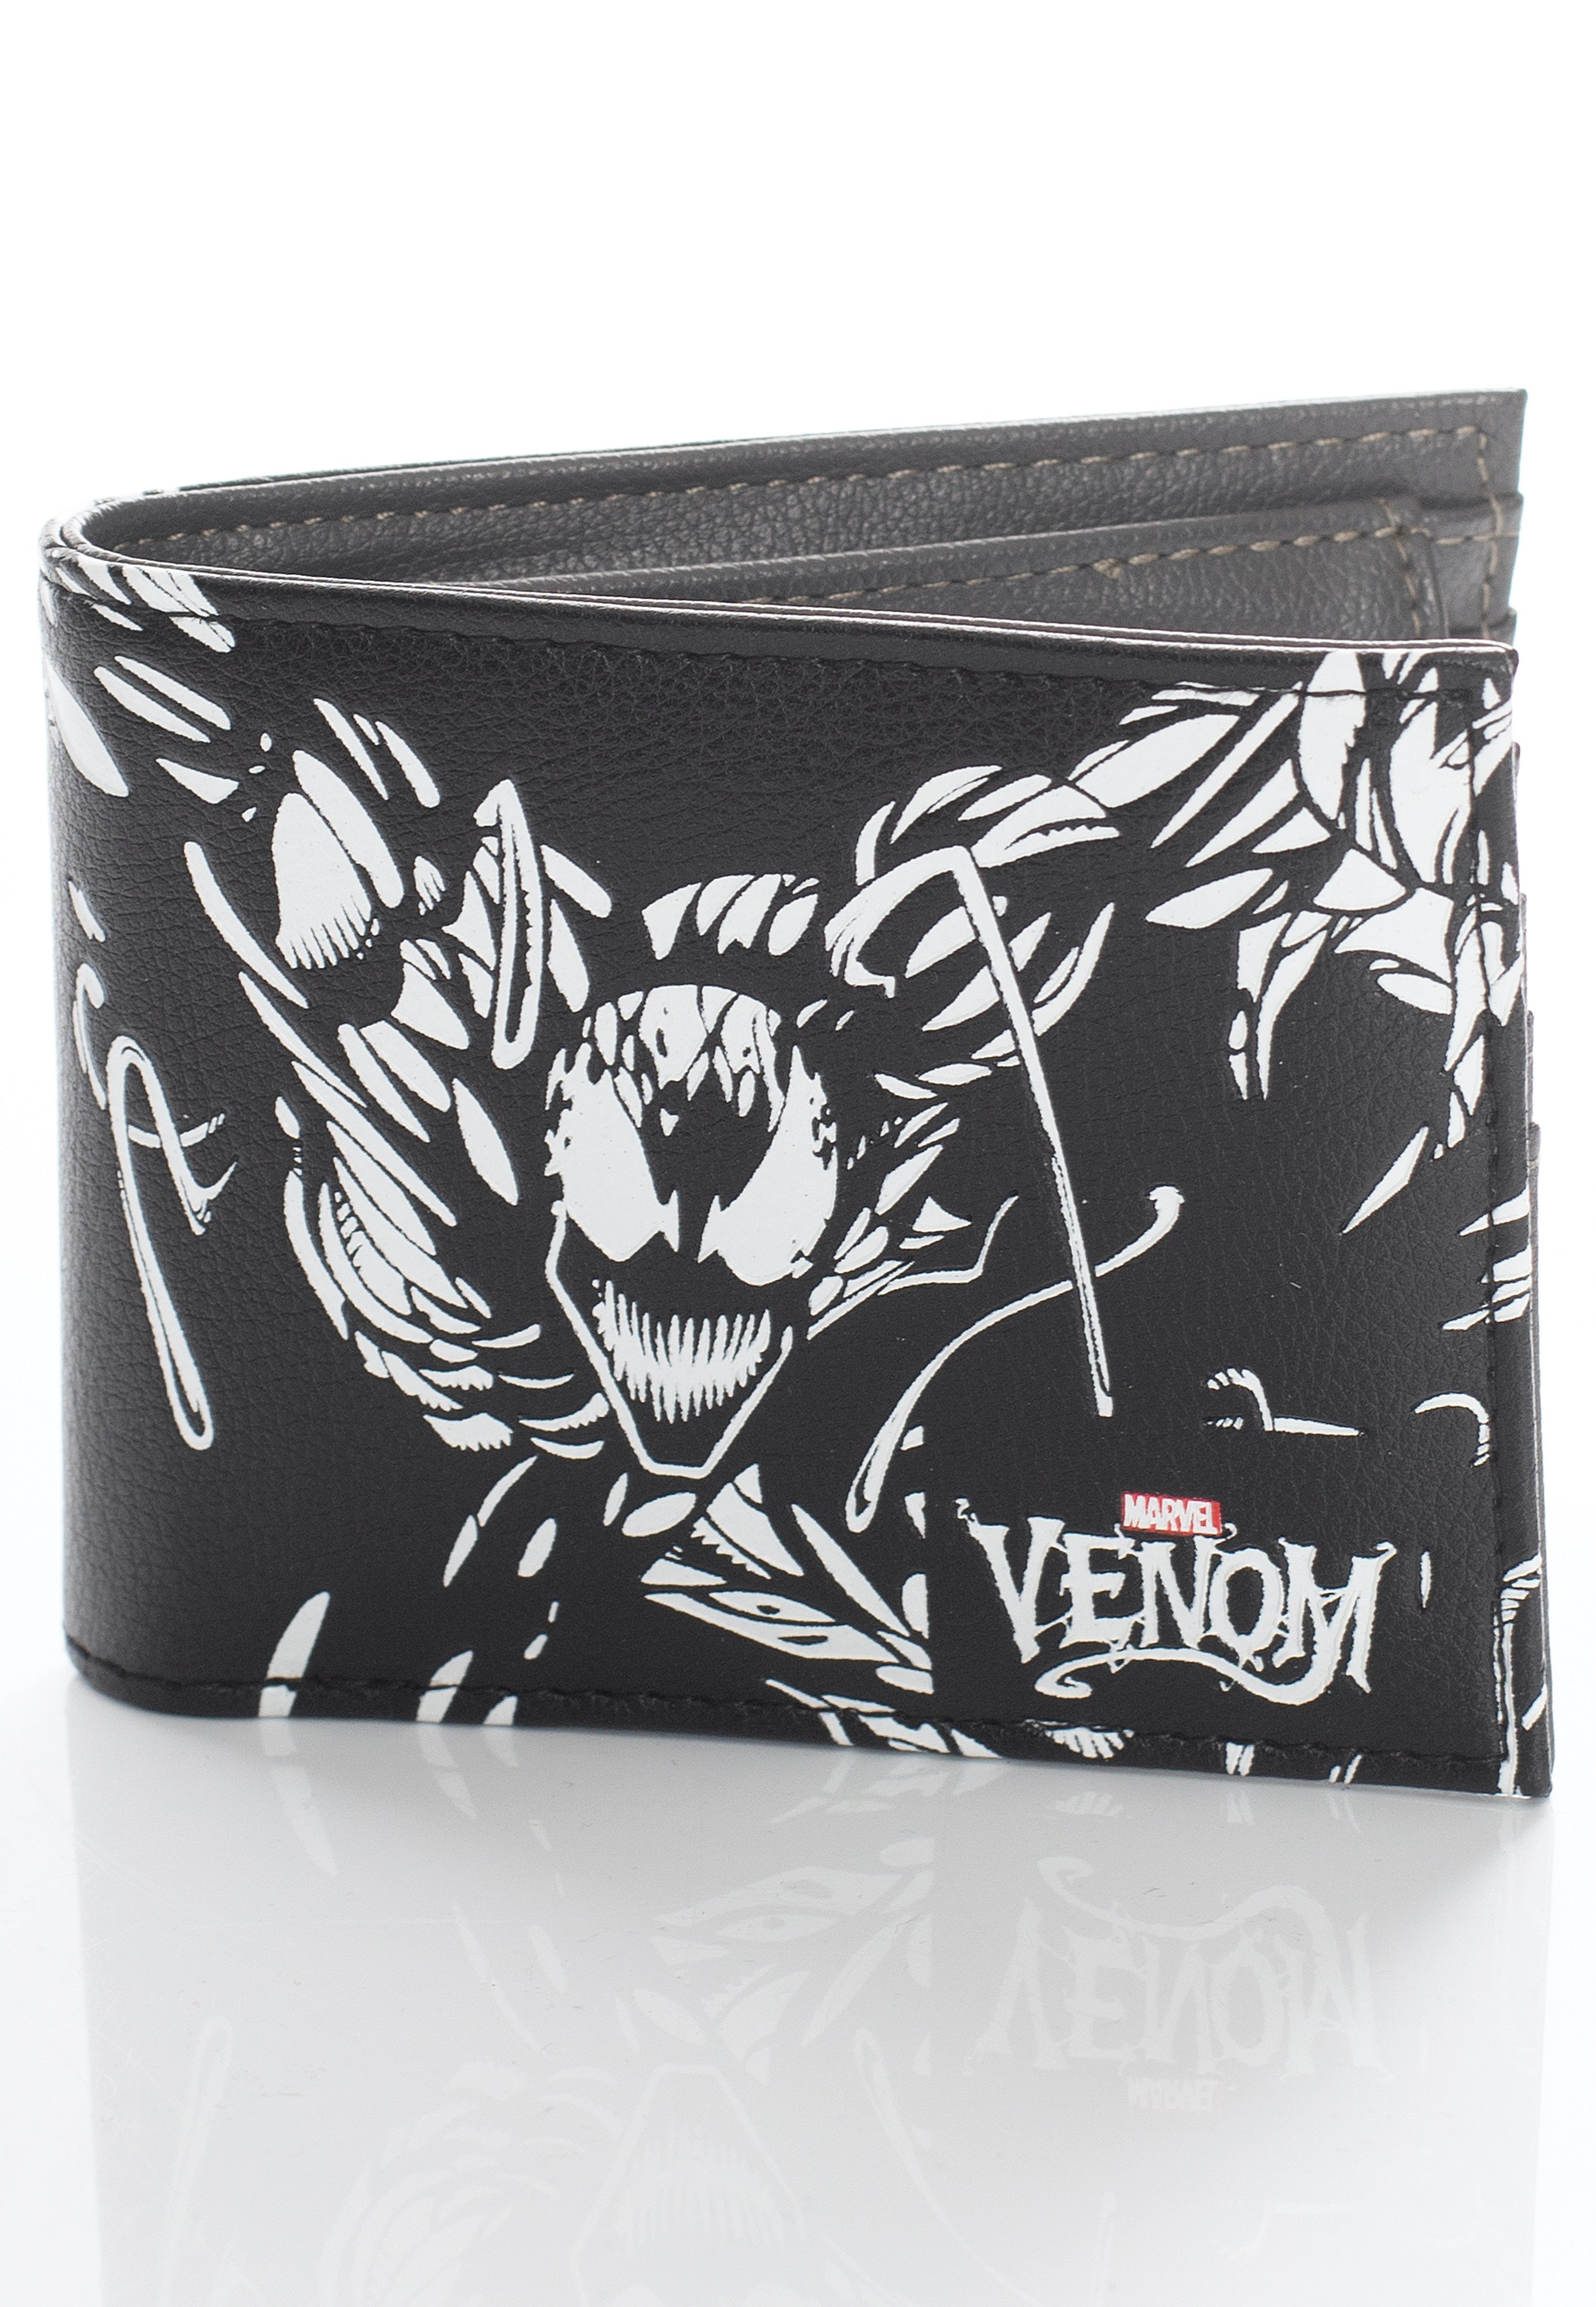 Venom - Symbiote Attack - Wallet